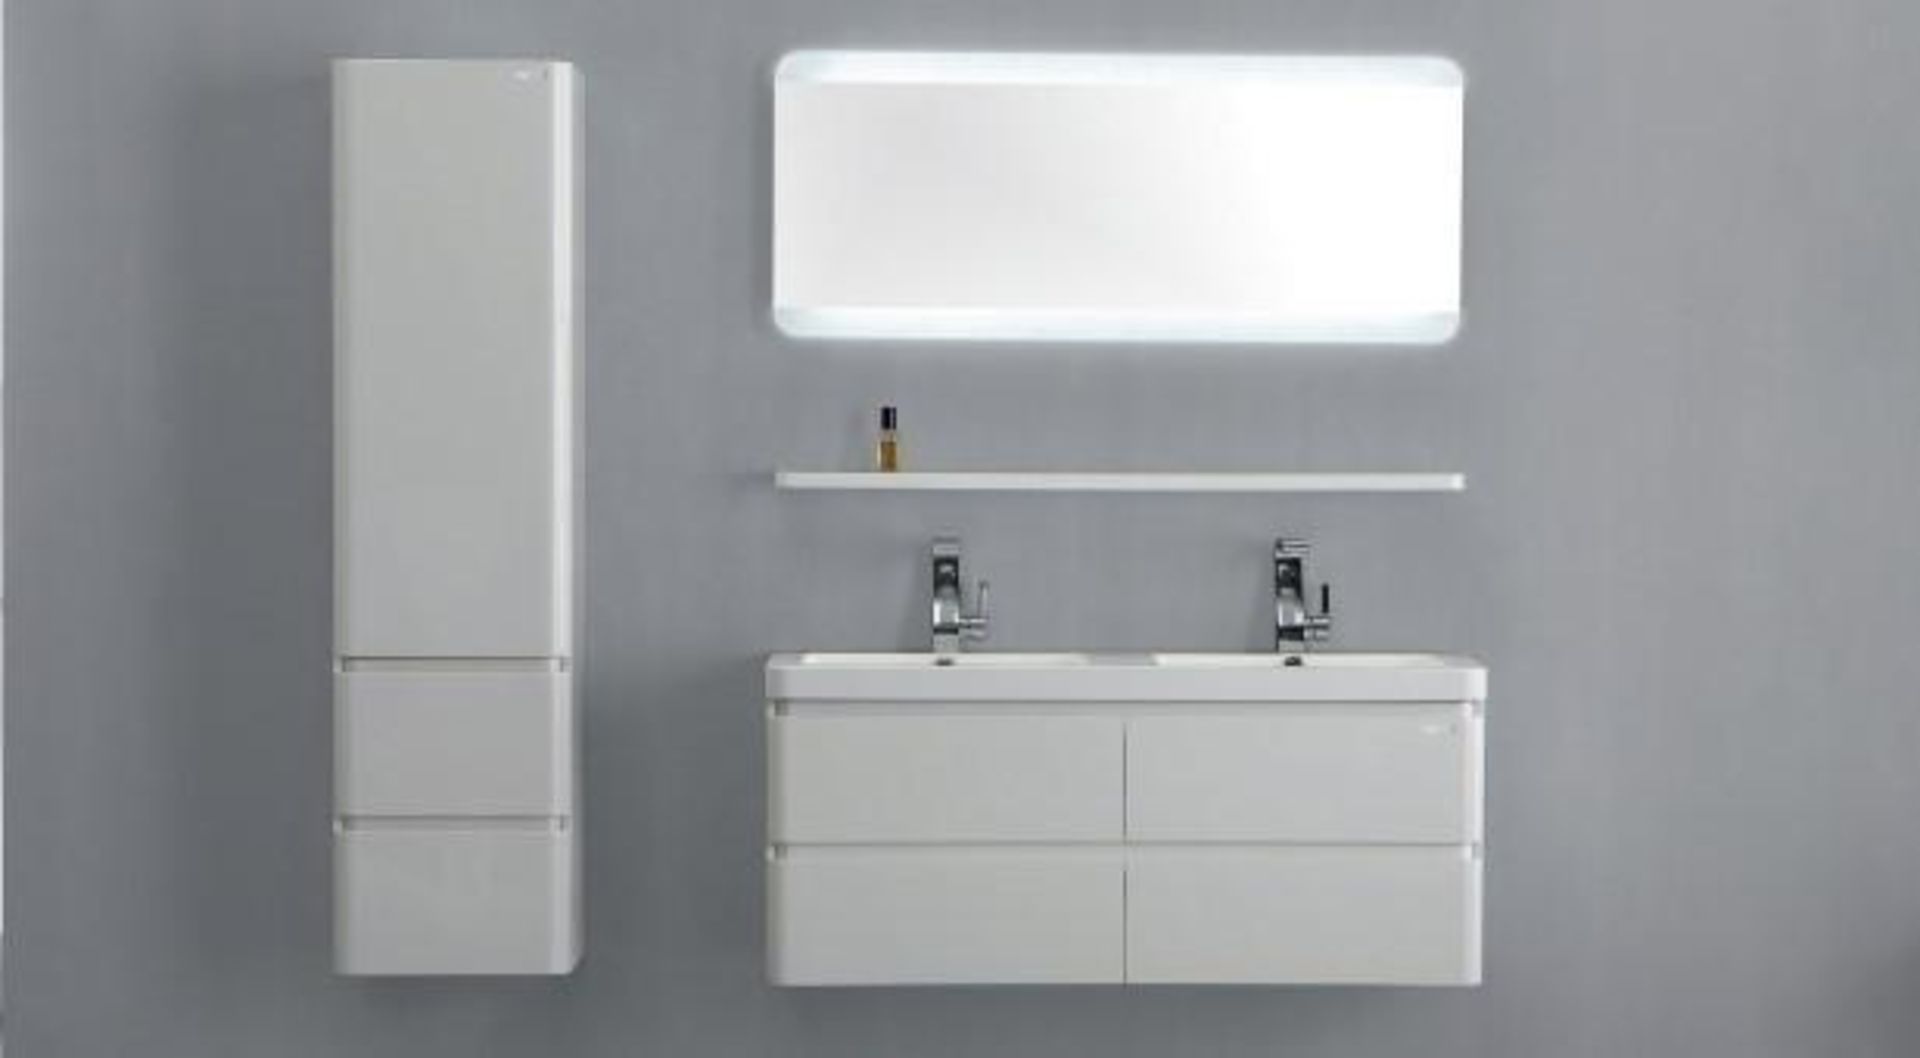 1 x Stylish Bathroom Edge Back-lit Mirror 100 - B Grade Stock - Ref:AMR11-100 - CL170 - Location: No